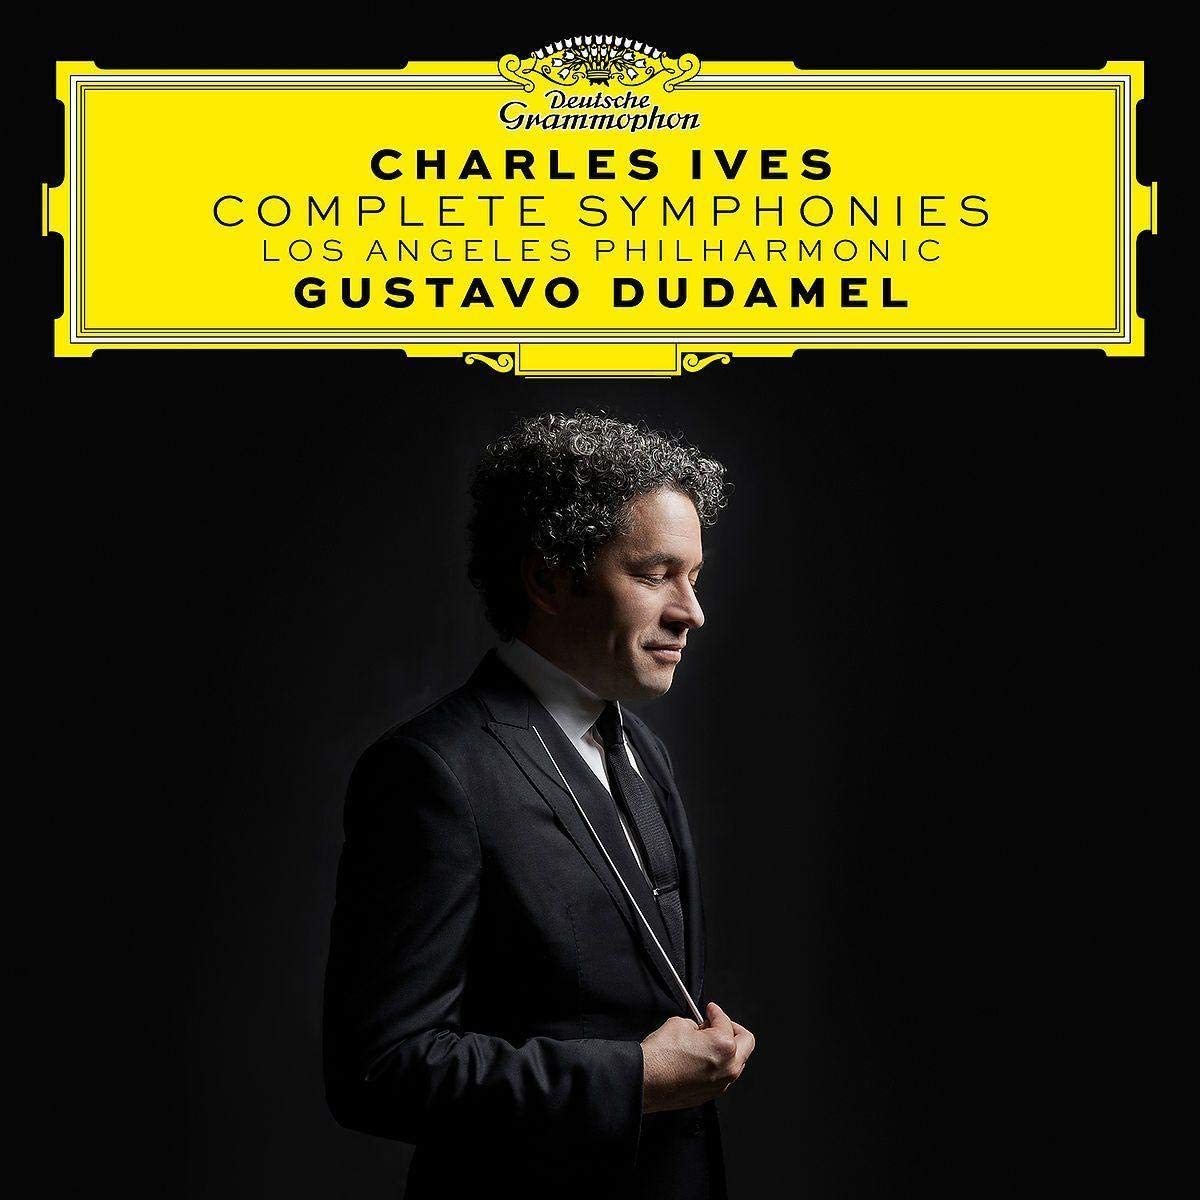 Complete Symphonies | Charles Ives, Gustavo Dudamel